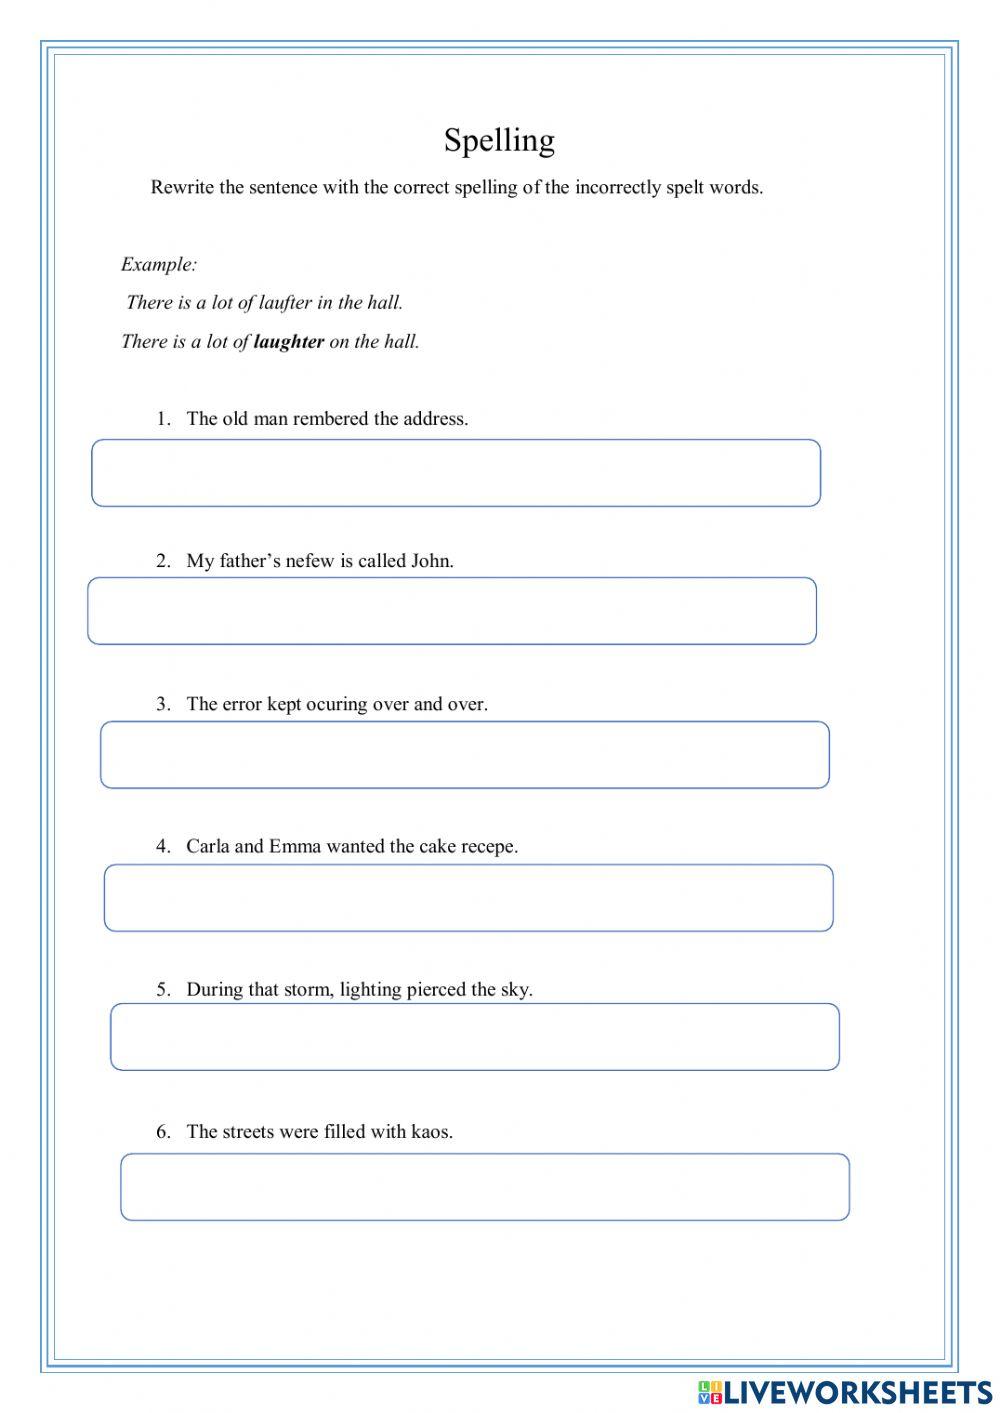 Spelling Worksheet02